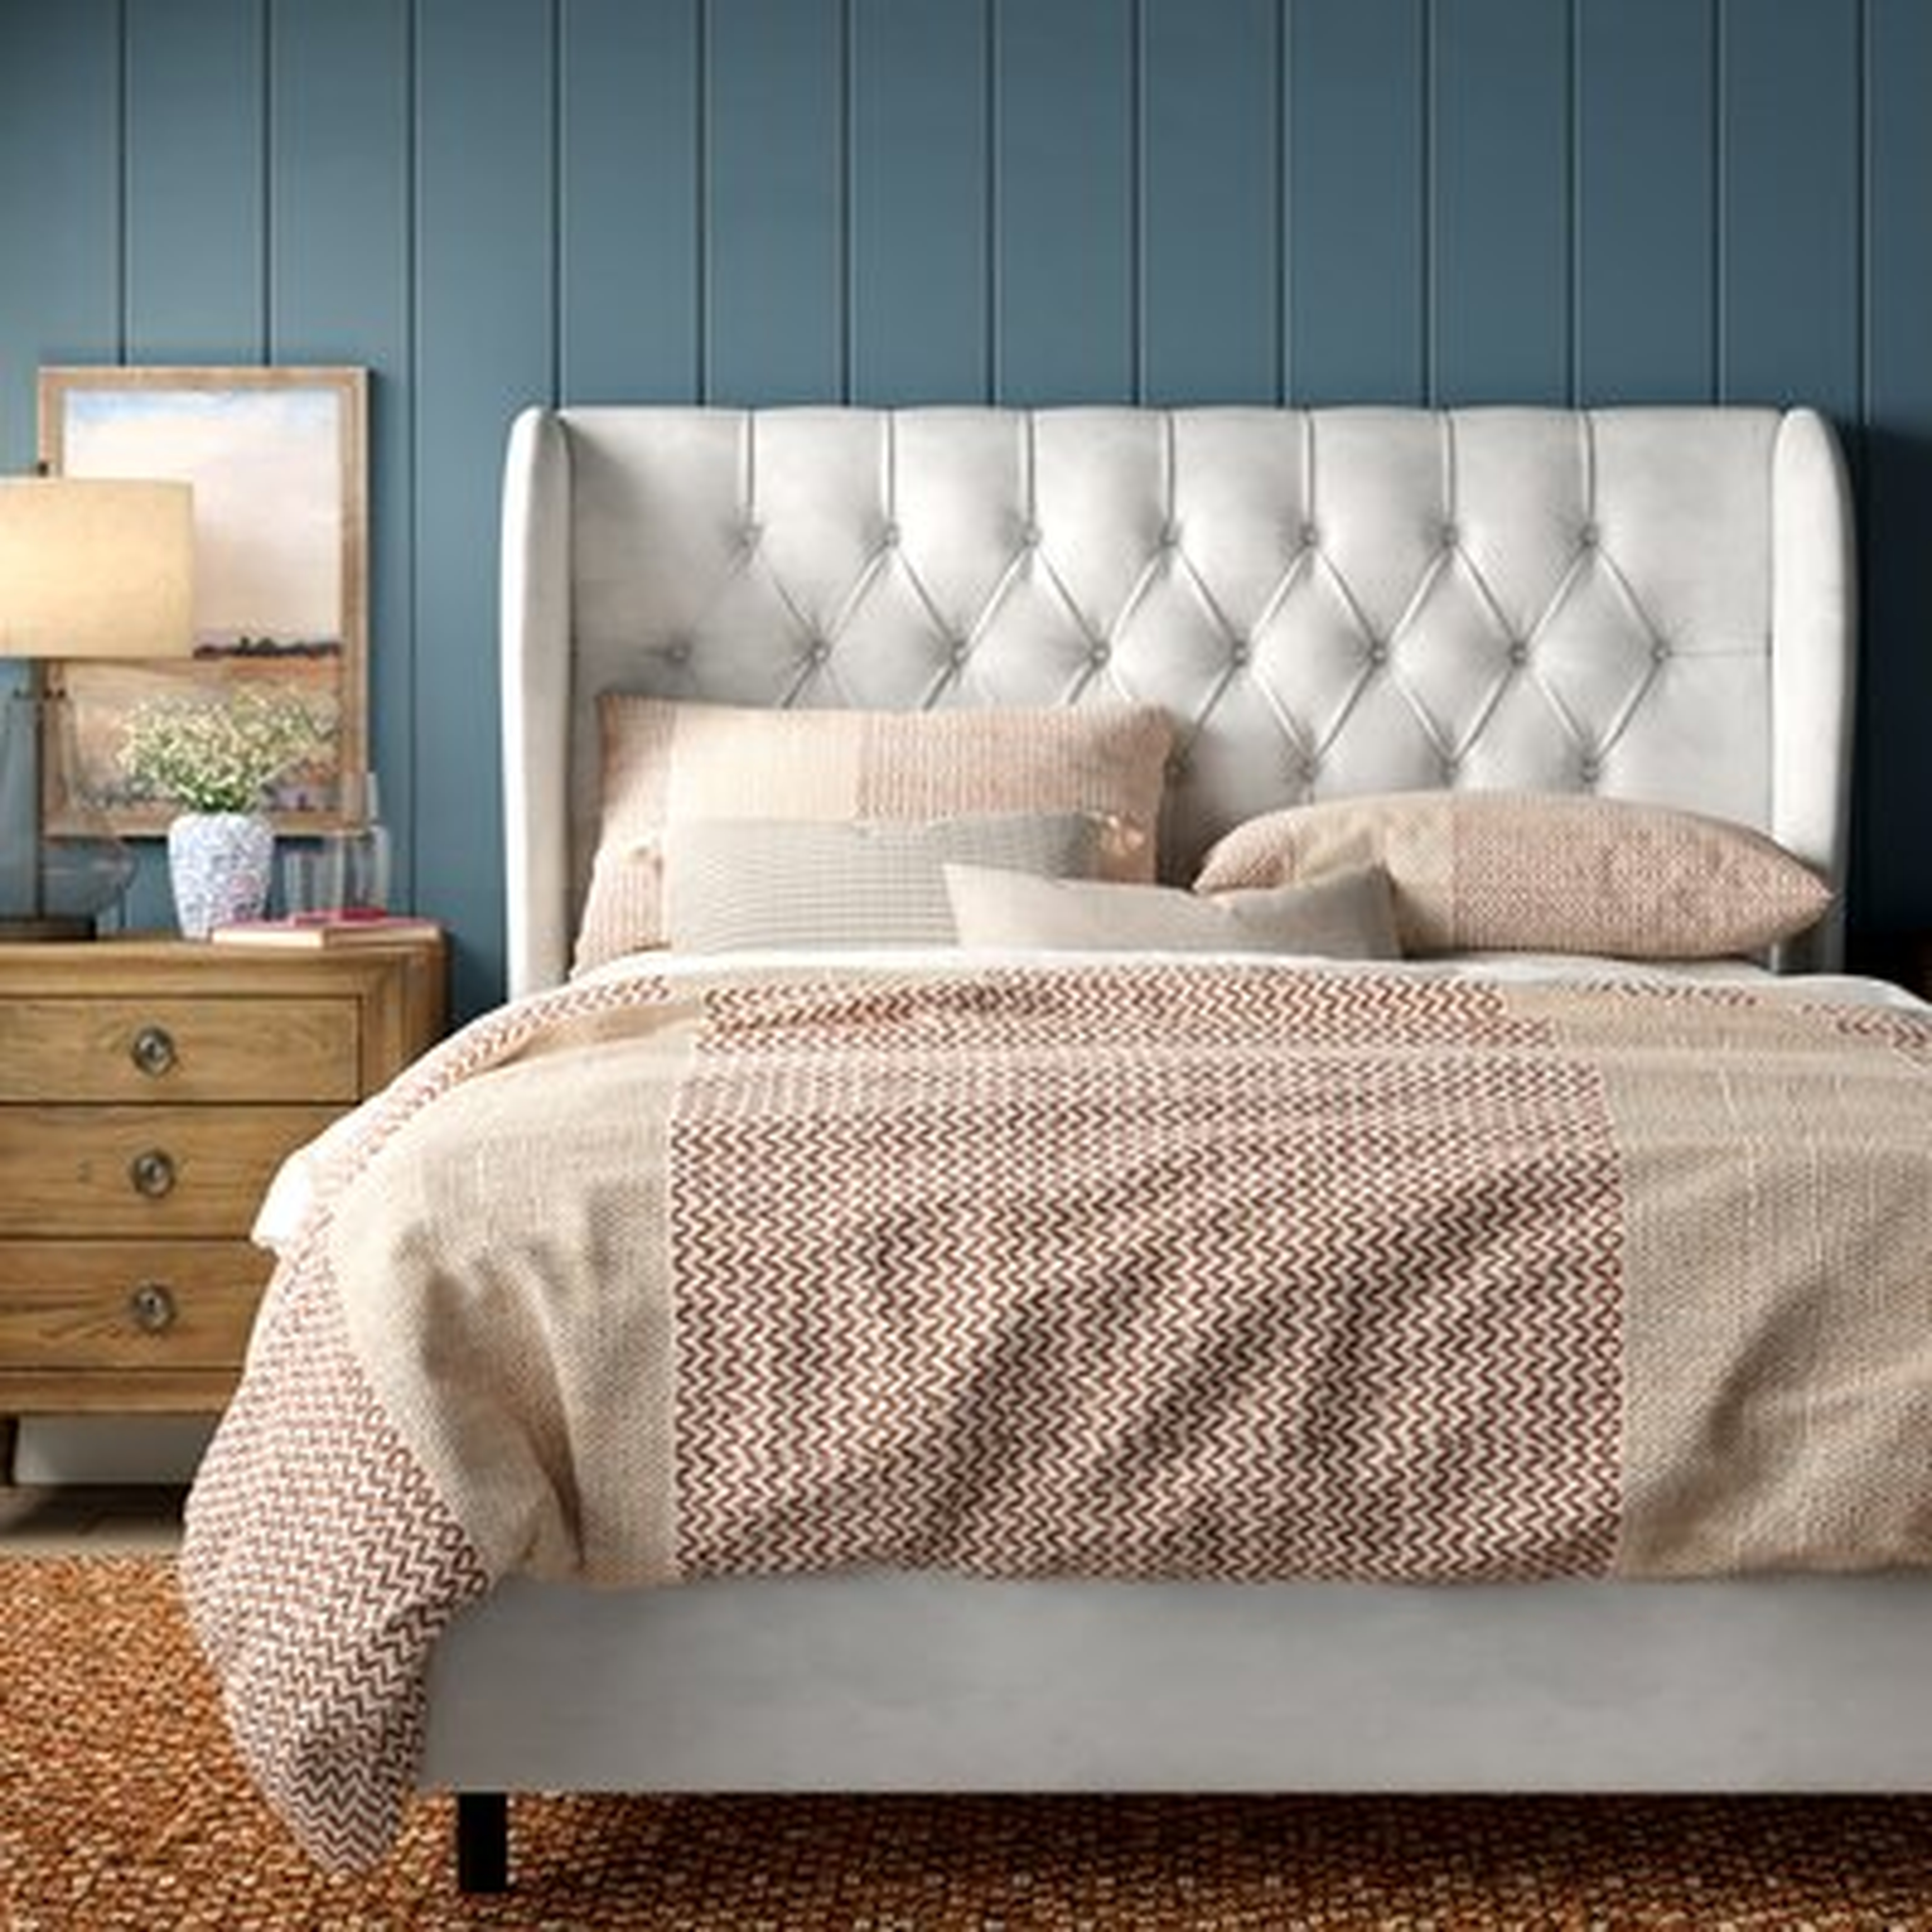 Knaresborough Tufted Upholstered Low Profile Standard Bed - Birch Lane